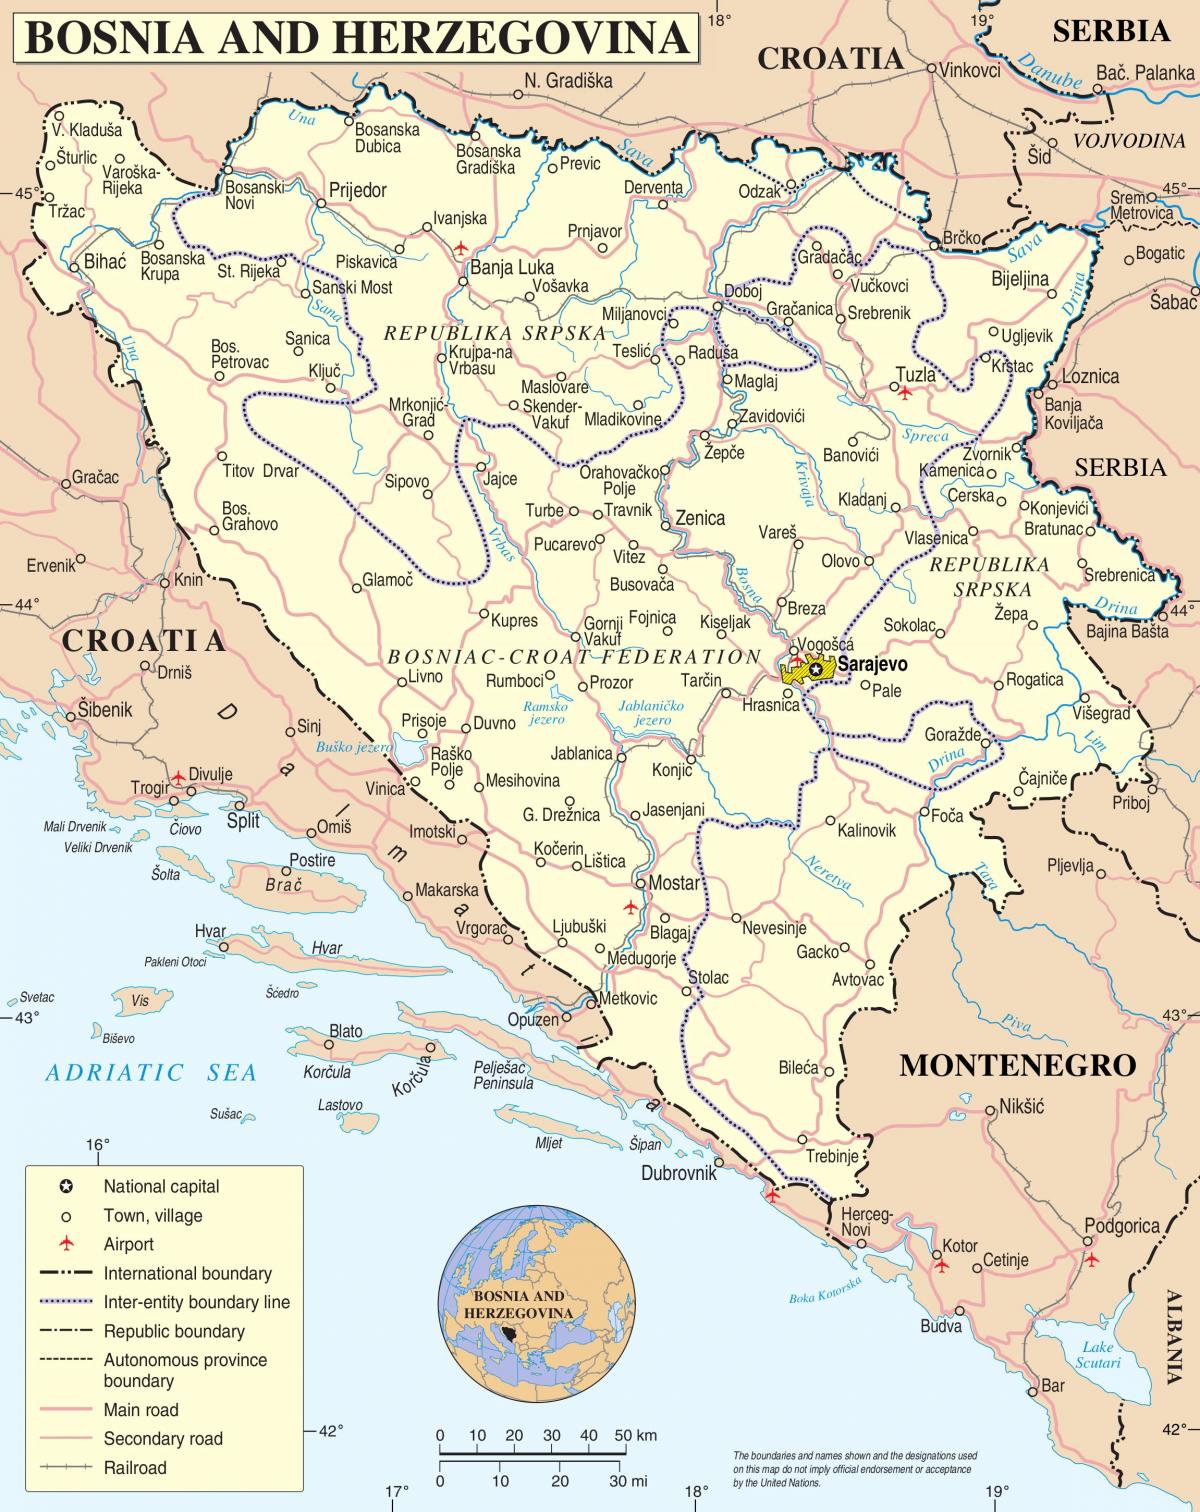 नक्शा बोस्निया के